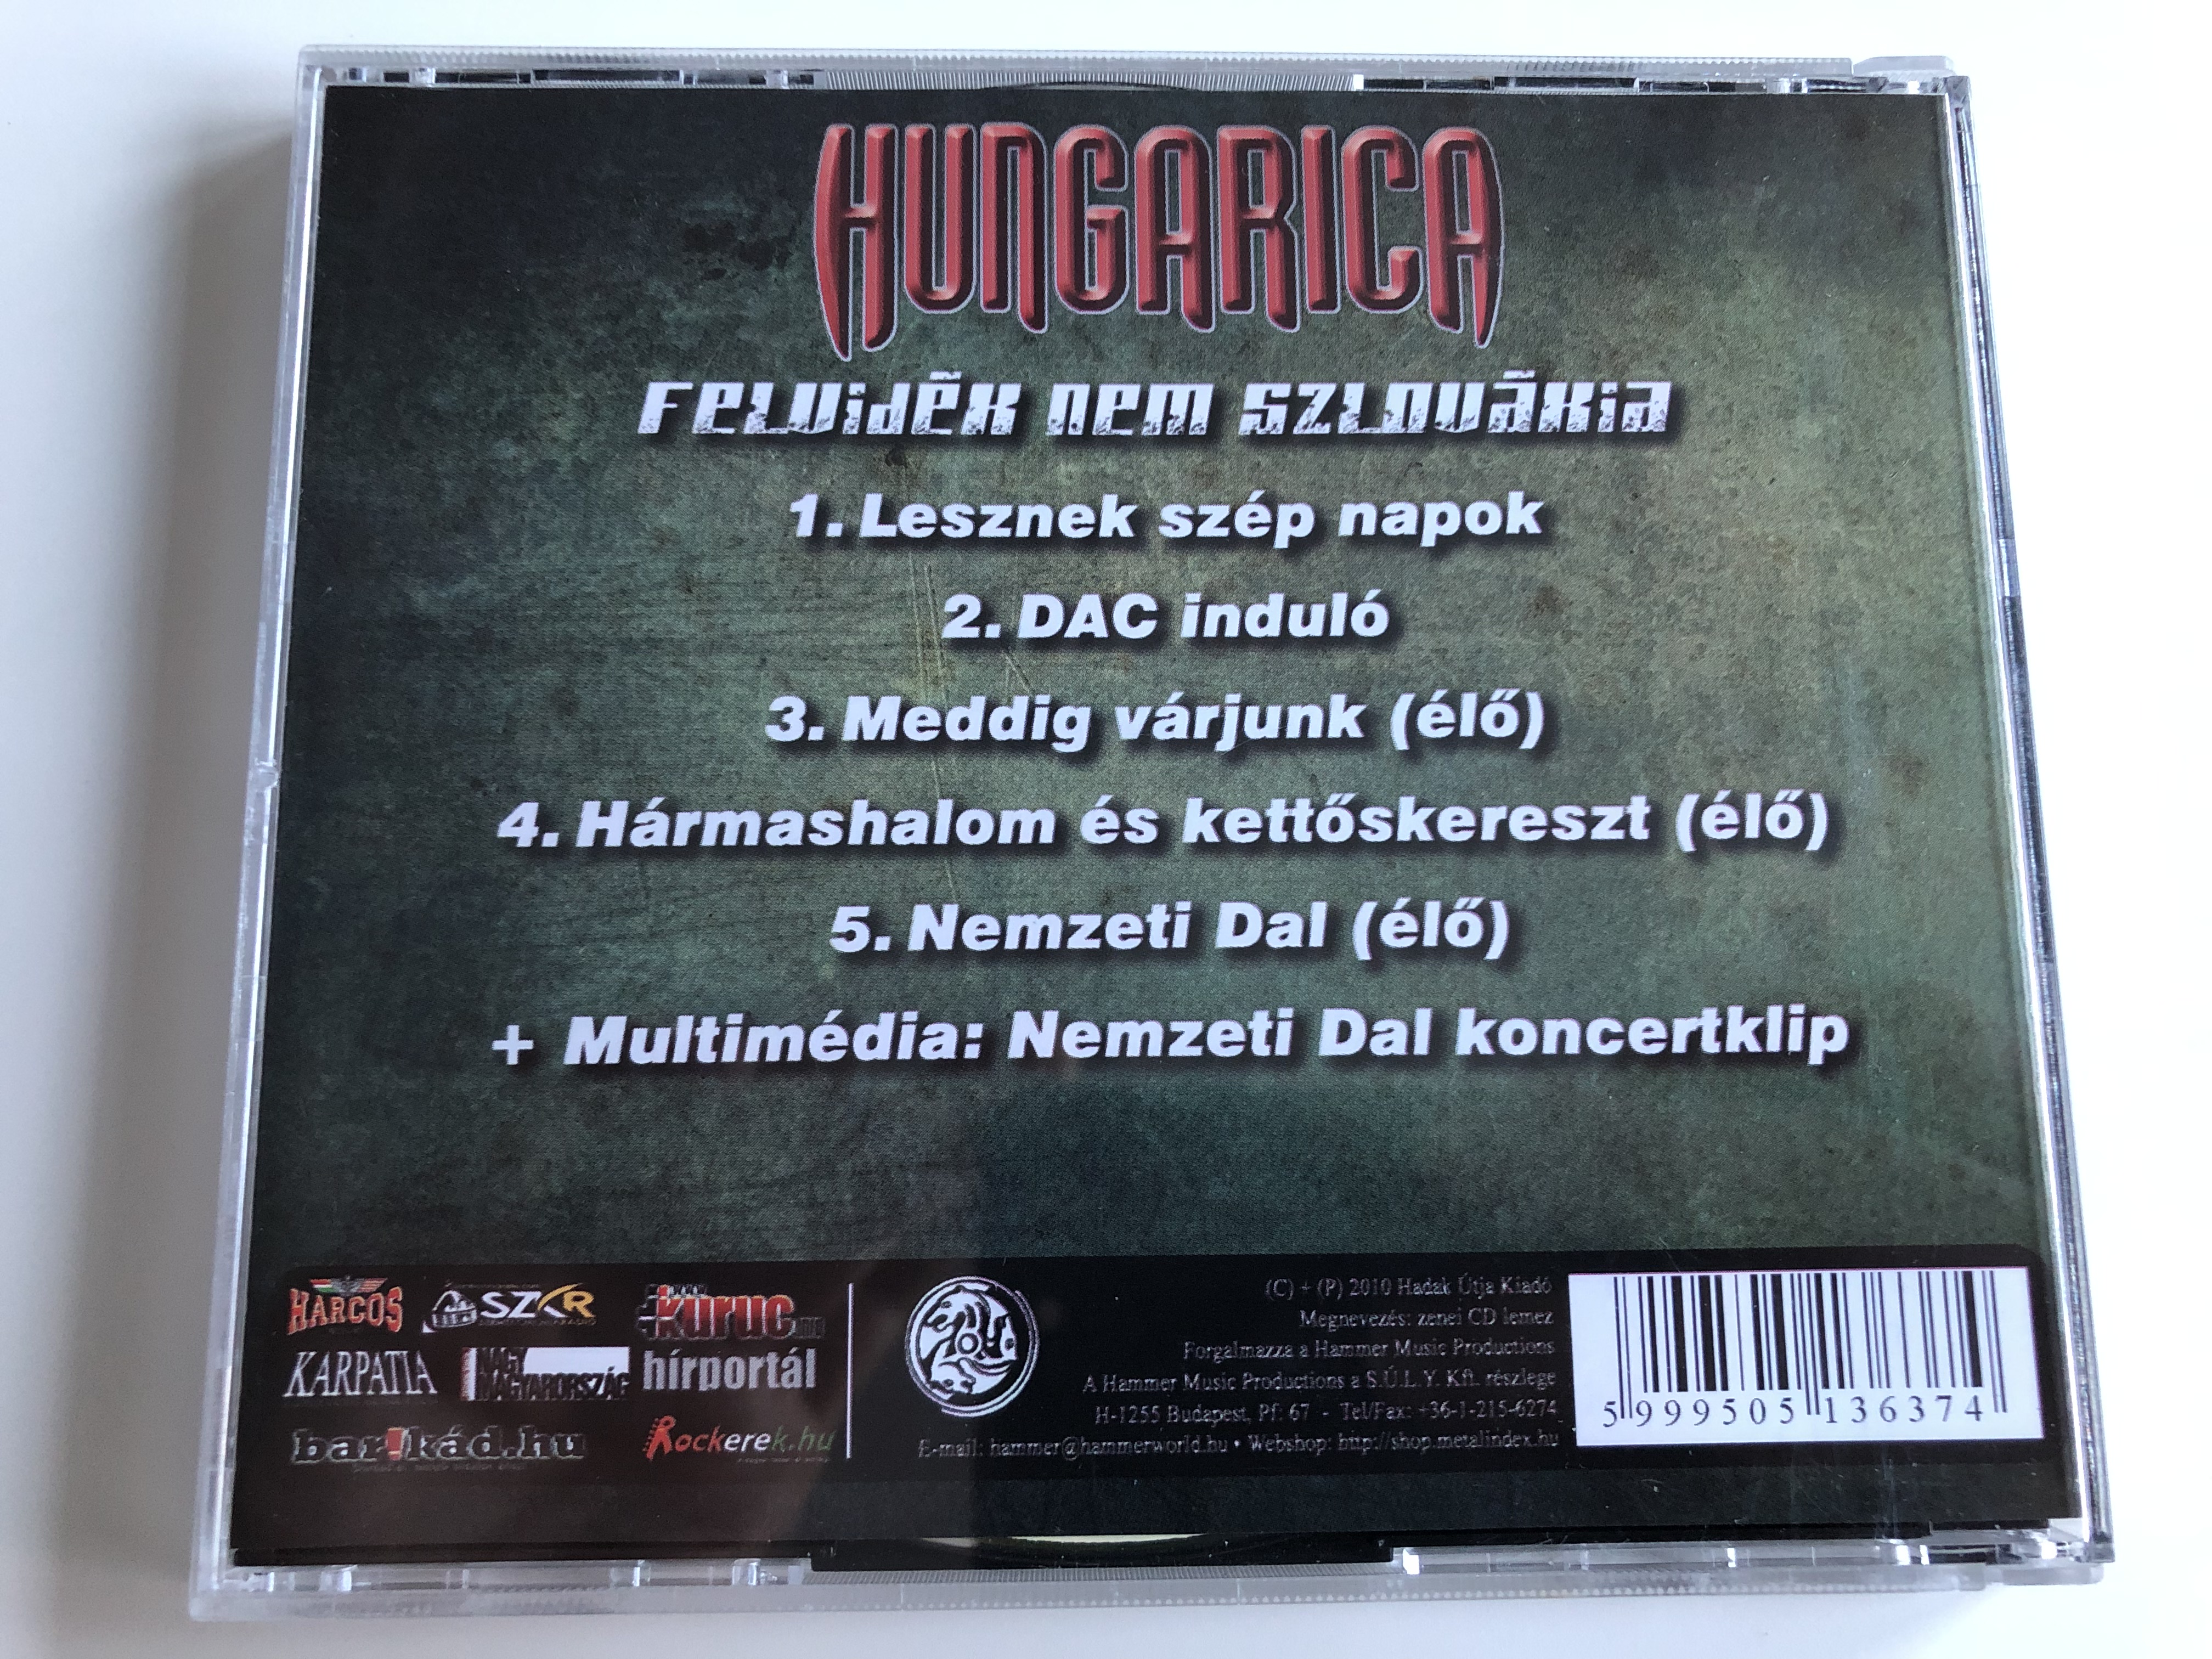 hungarica-felvid-k-nem-szlov-kia-hadak-tja-kiad-2x-audio-cd-2010-hukcd-014-6-.jpg